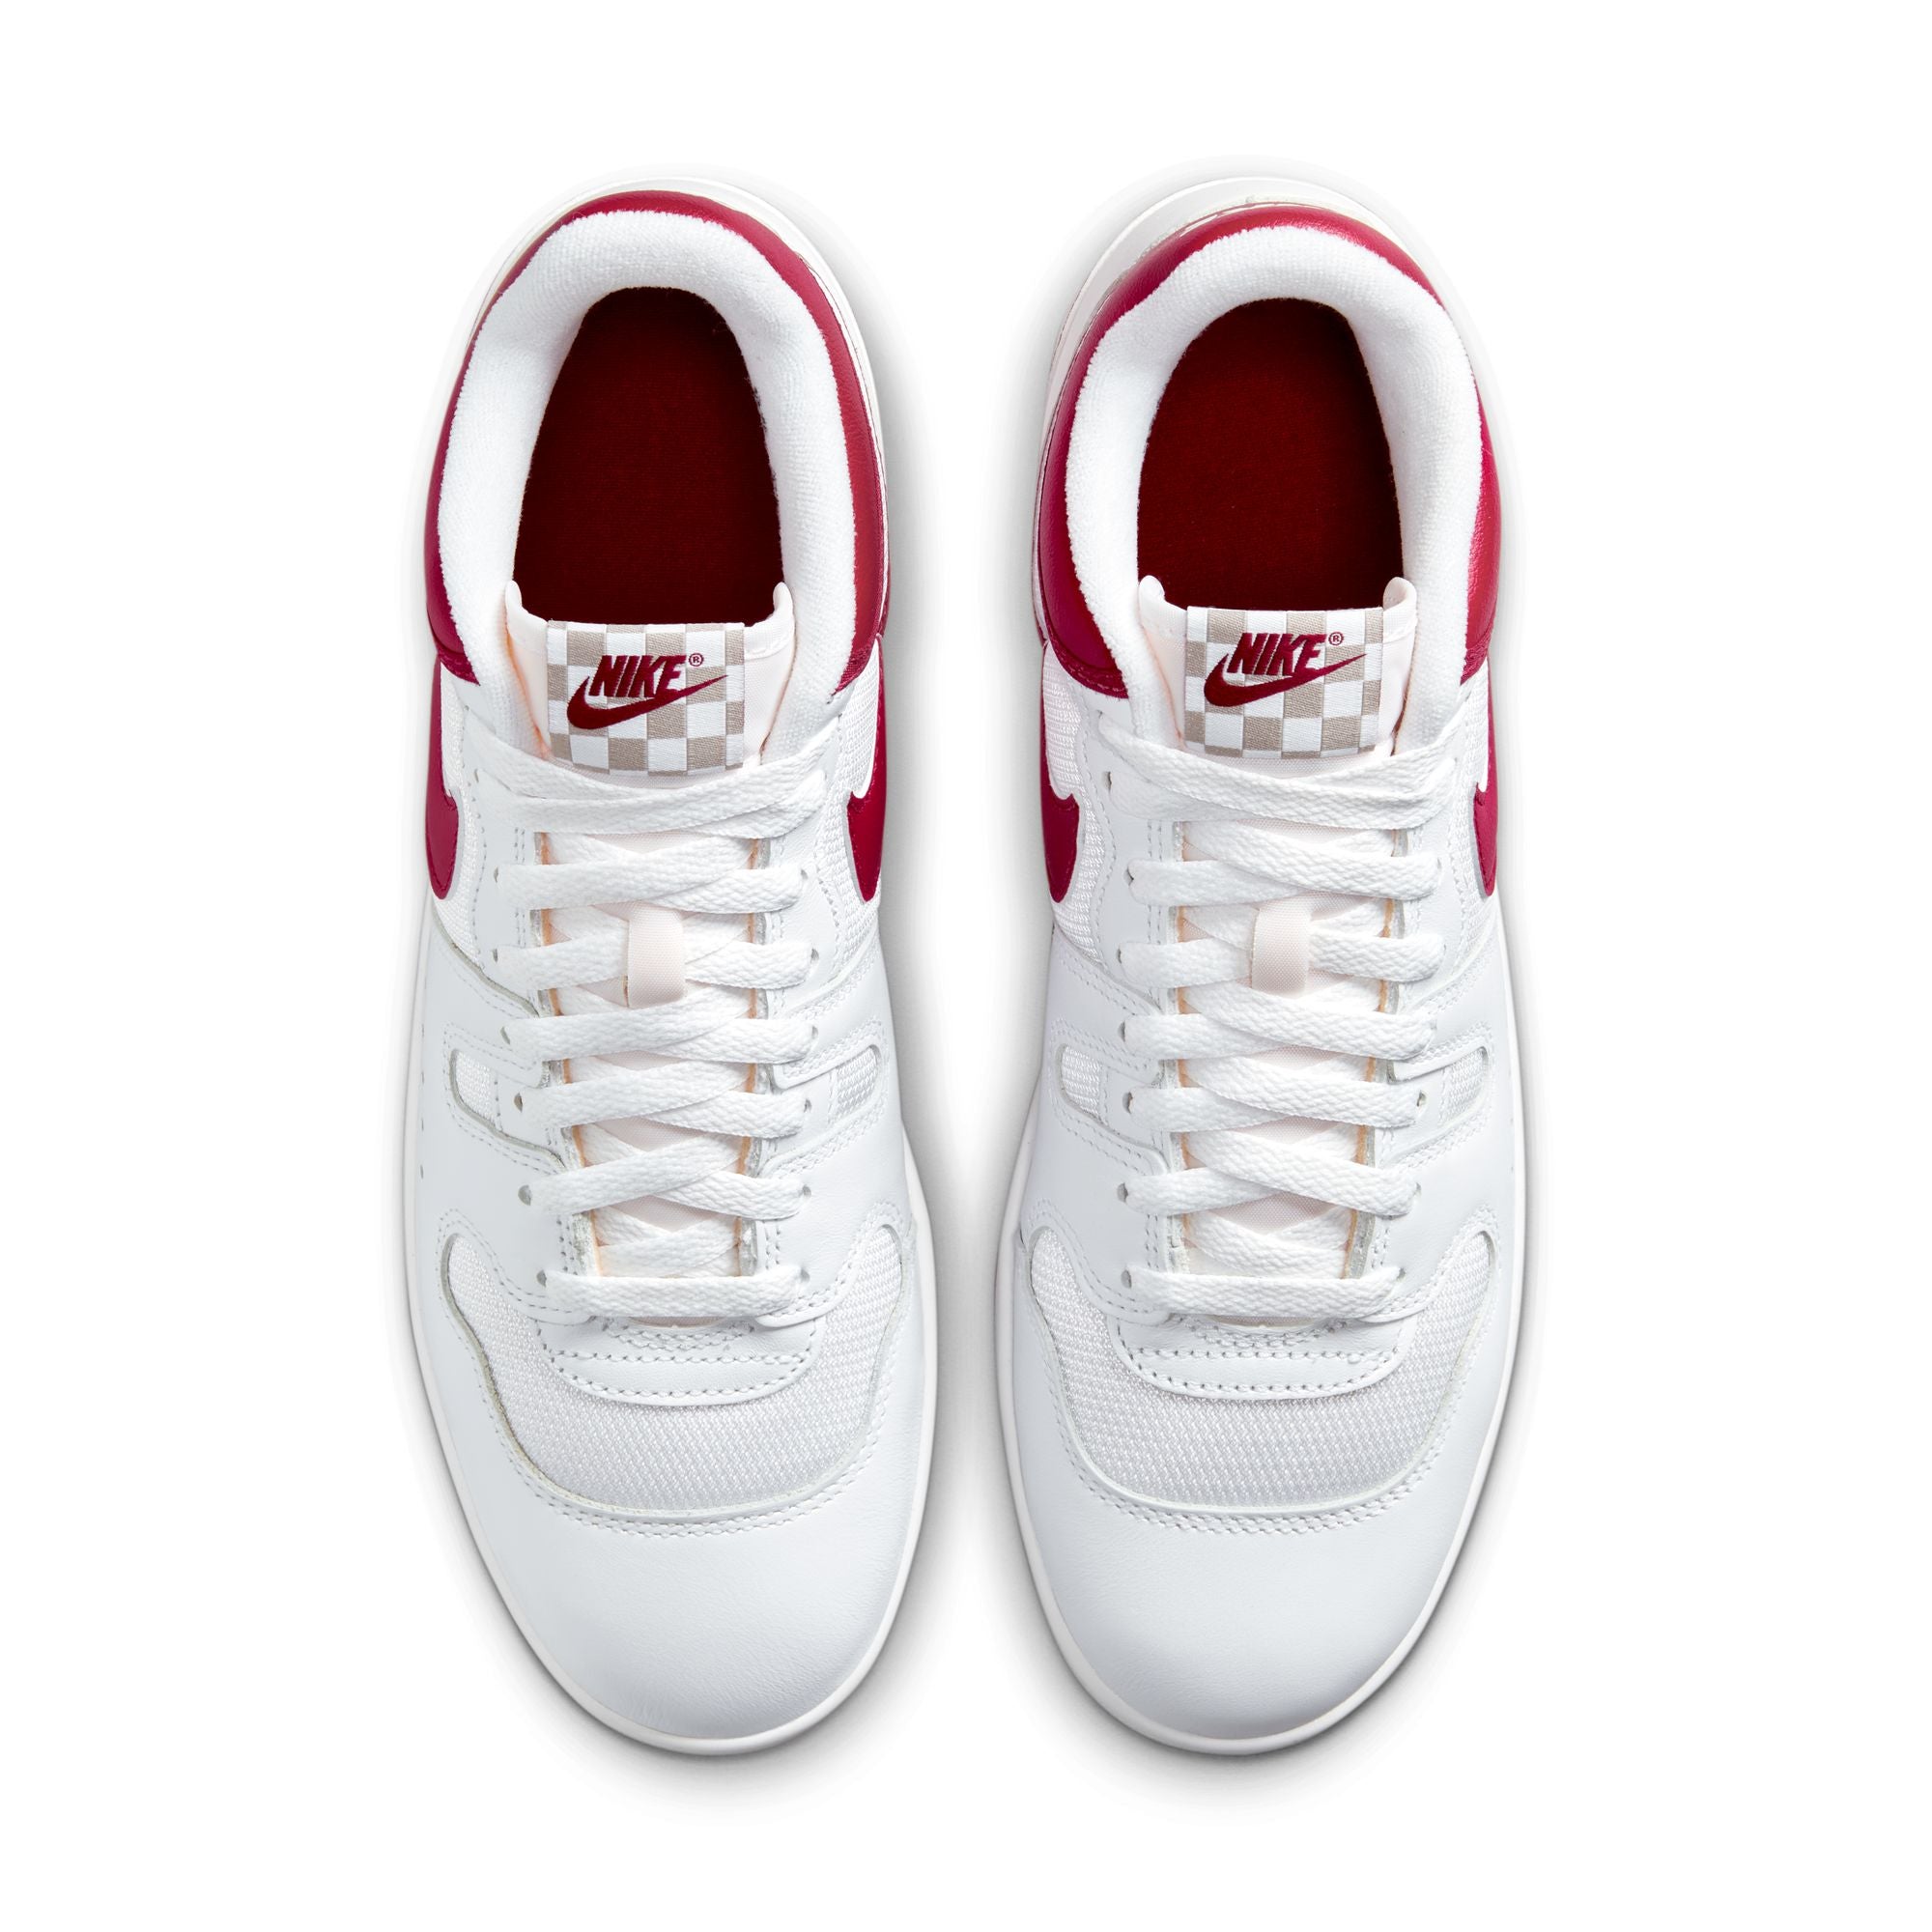 NIKE - Nike Attack Qs Sp - (White/Red Crush-White)